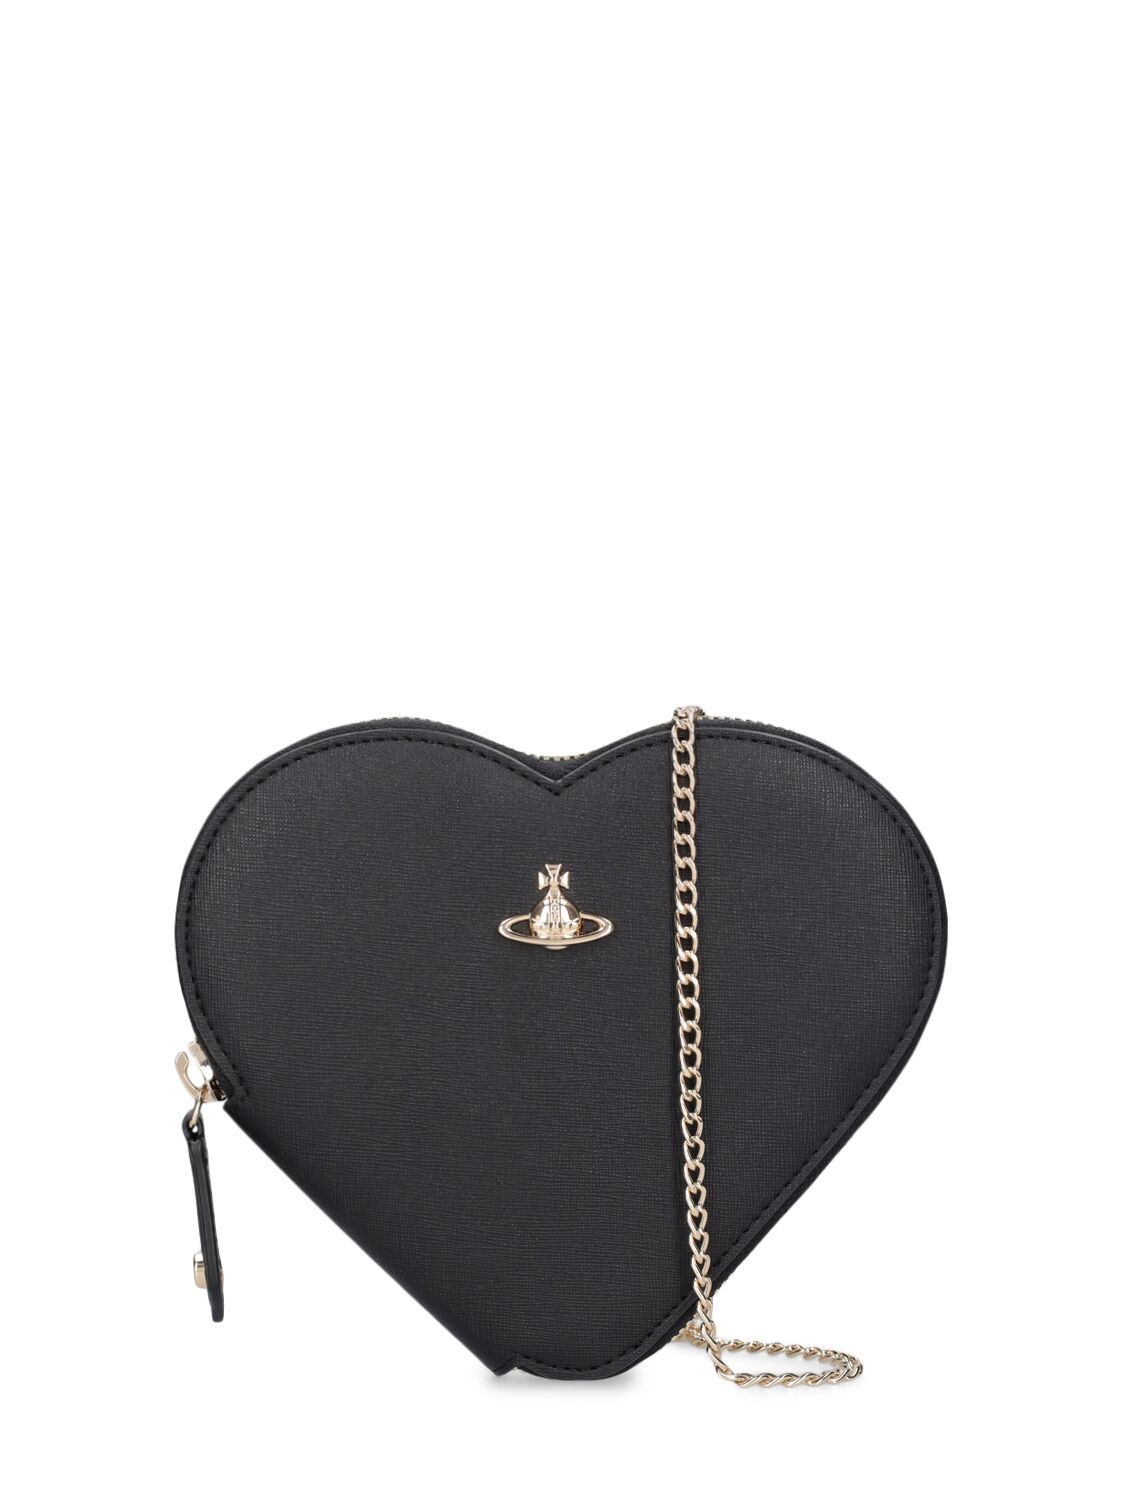 Vivienne Westwood Heart Faux Leather Bag In Black